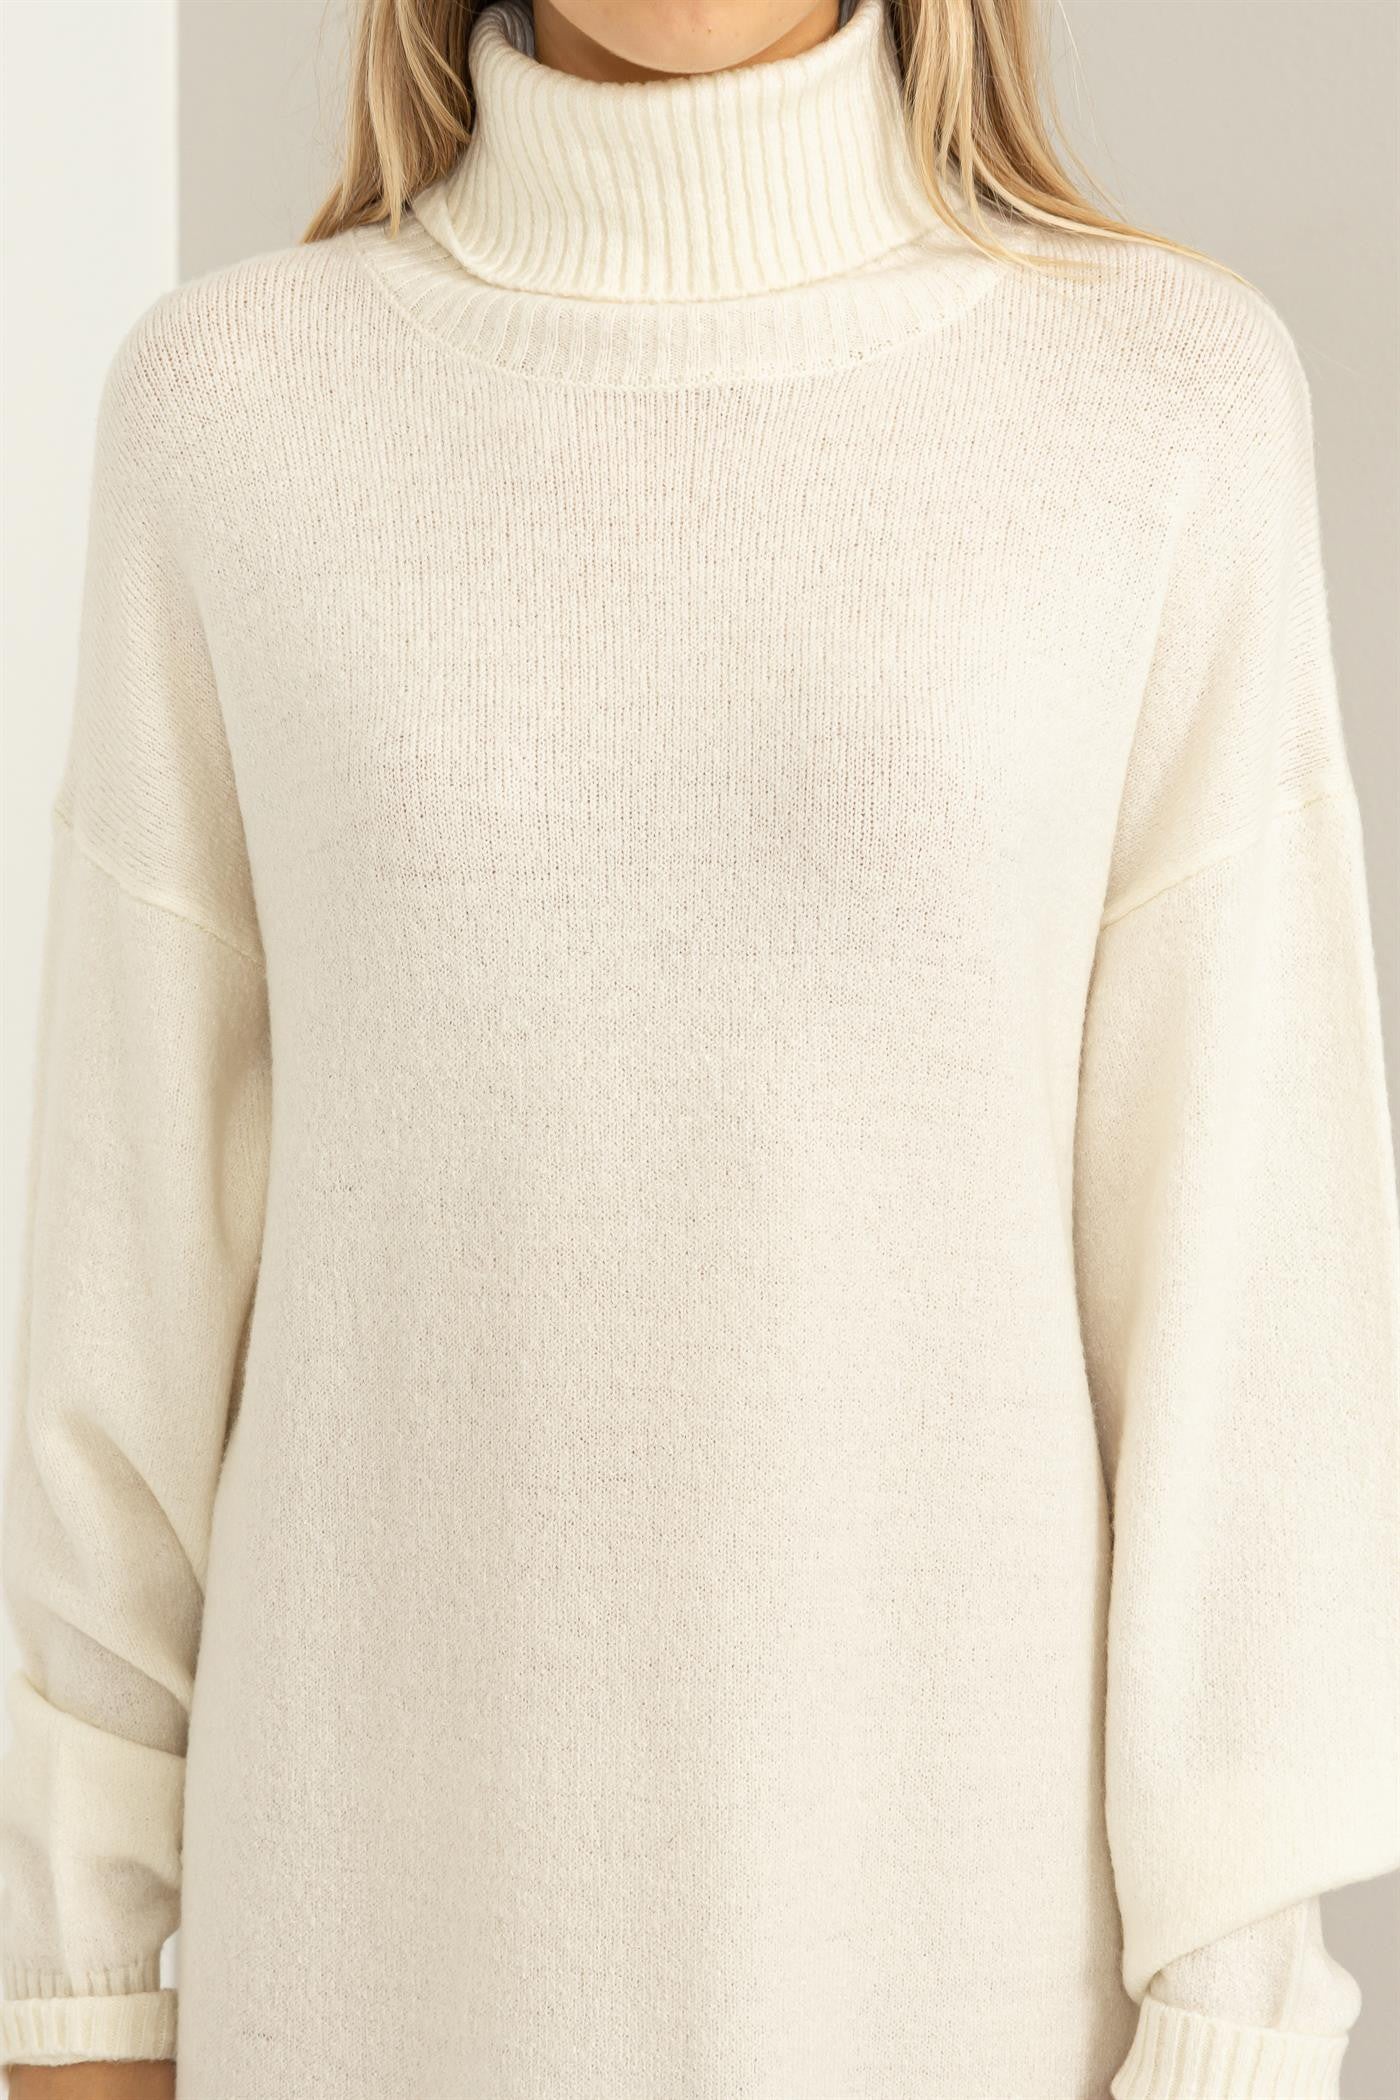 Too Cute Cream Turtleneck Sweater Dress